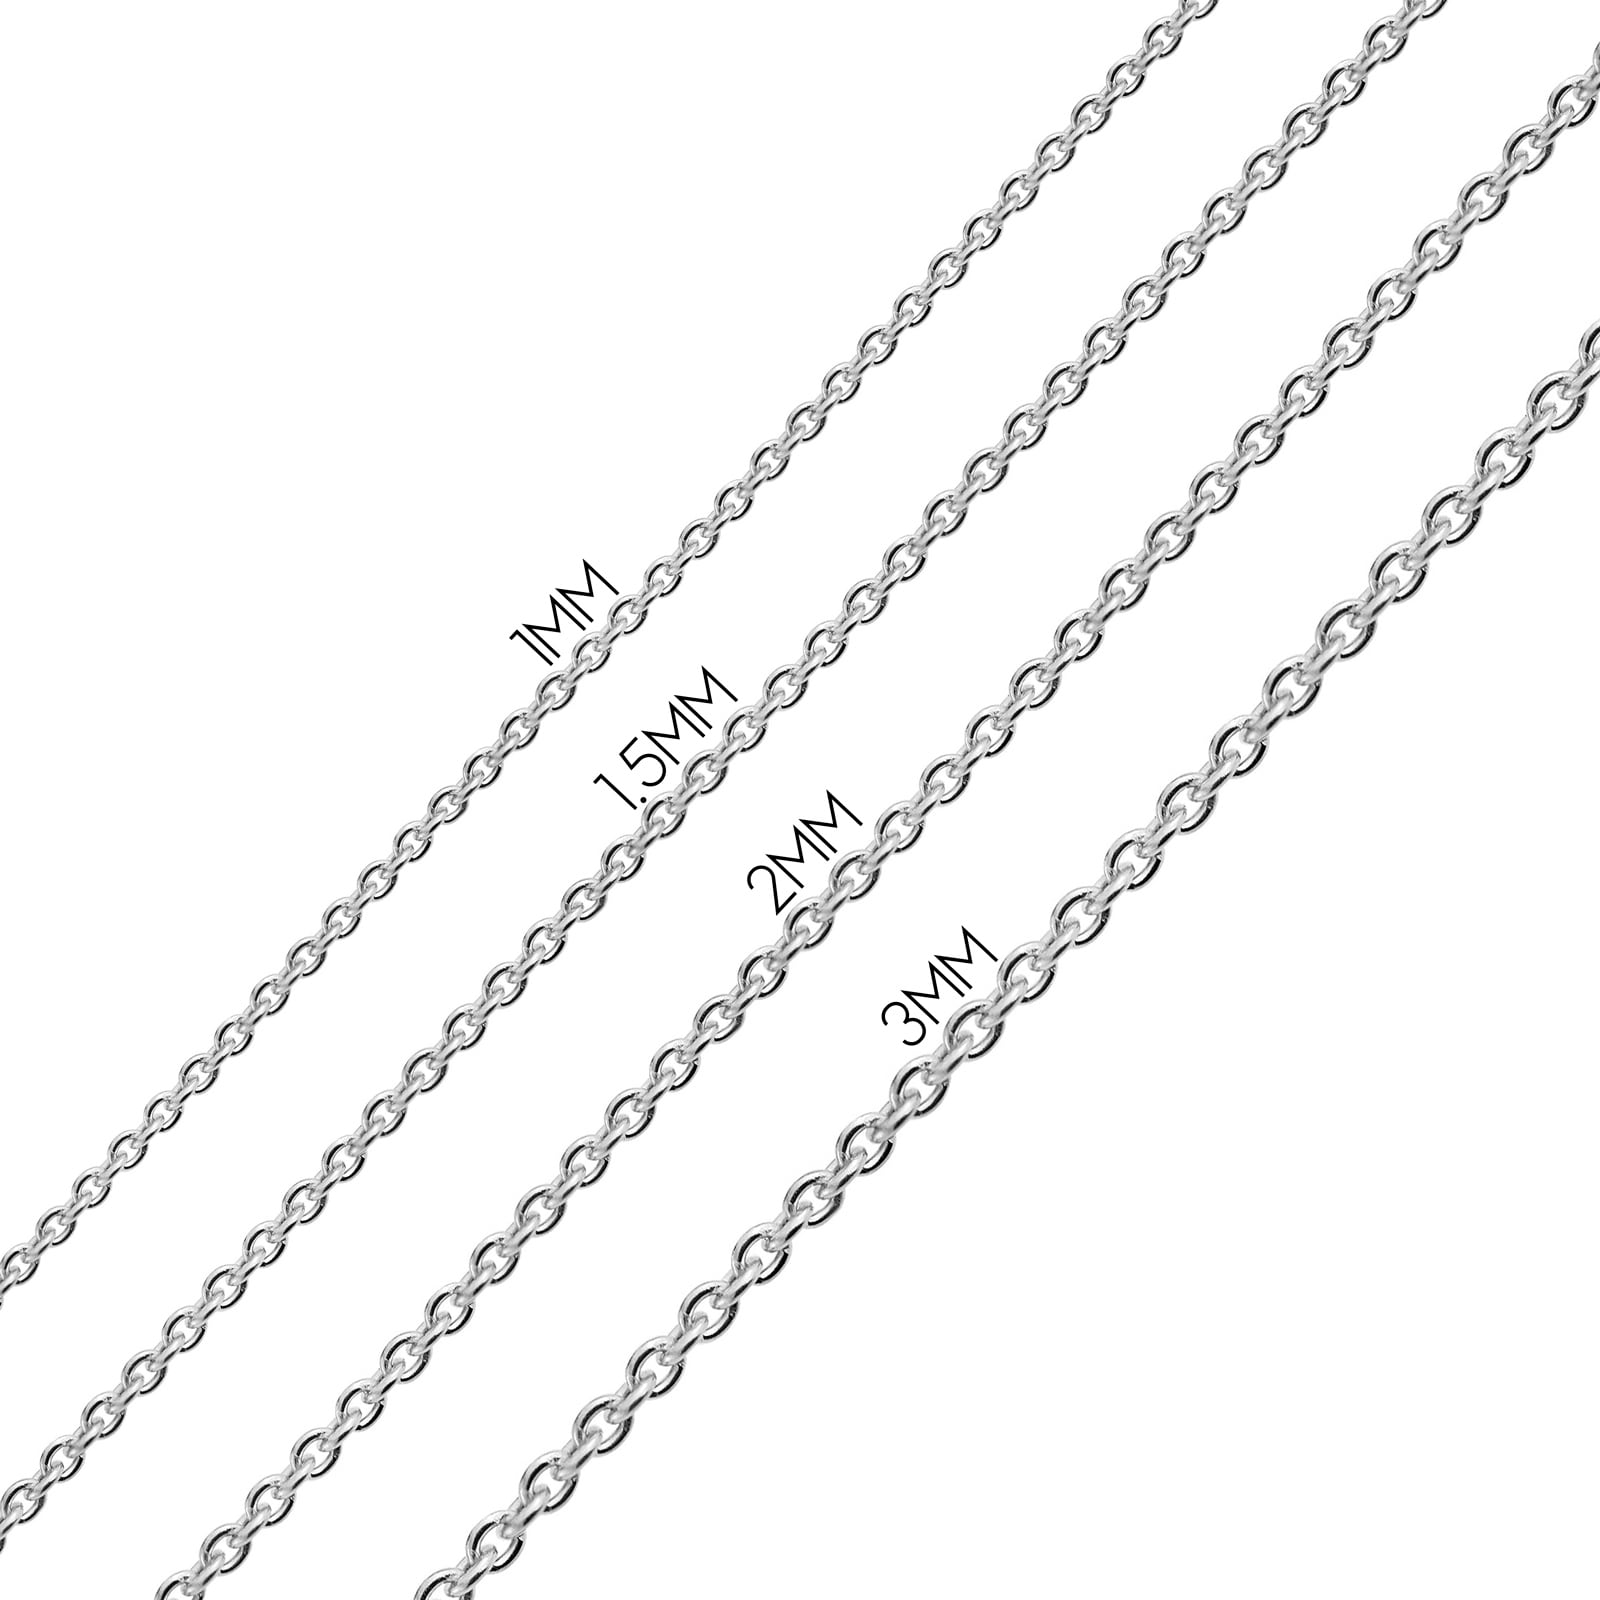 Snake 020 Italian Chain Sterling Silver 925 Necklace Fine Jewelry 30 inch long